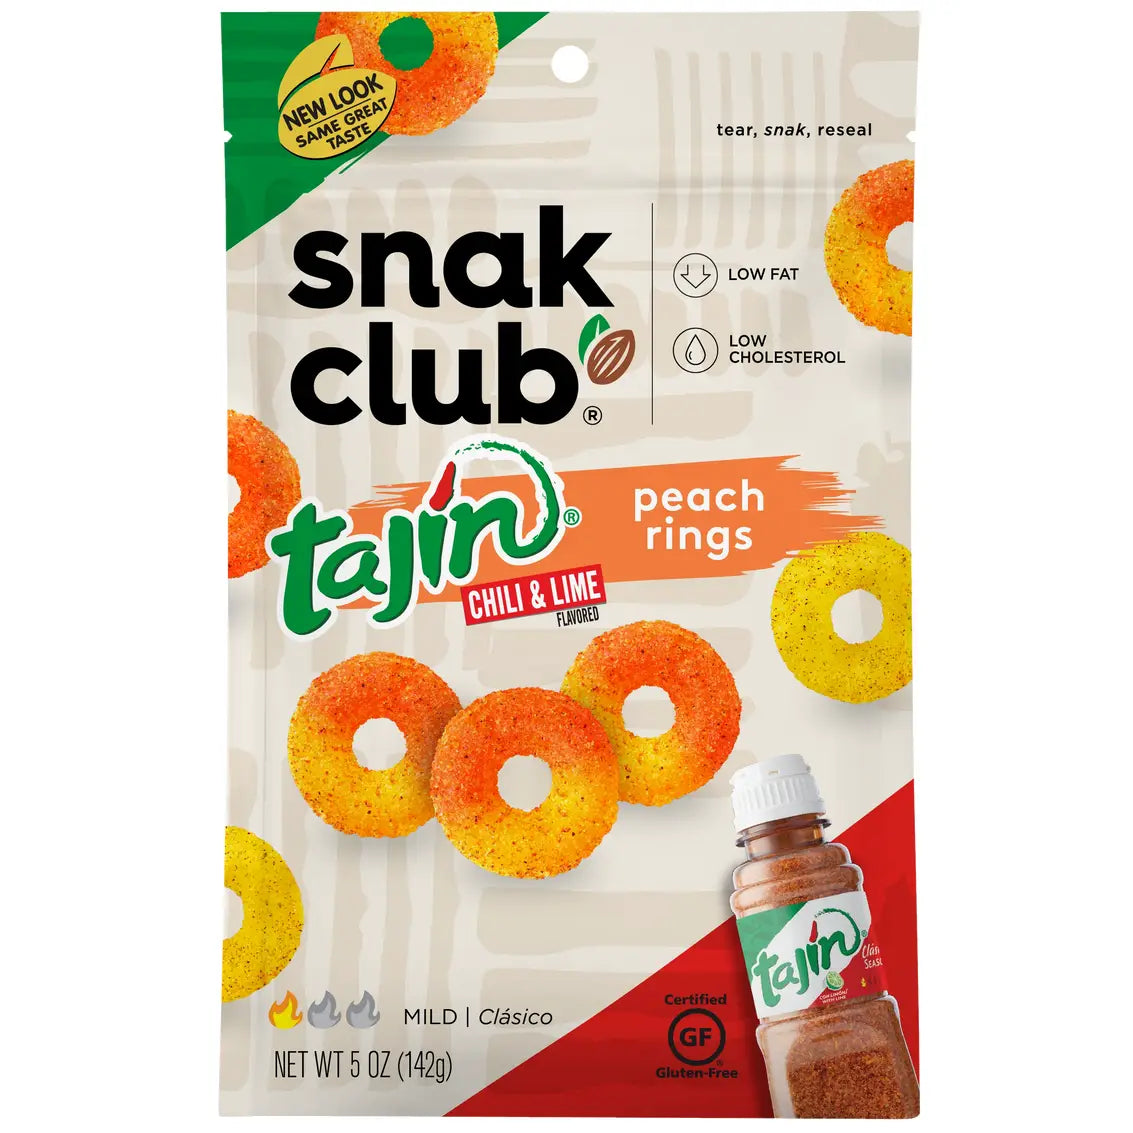 Snak Club Tajin Chili & Lime Peach Rings - 5oz